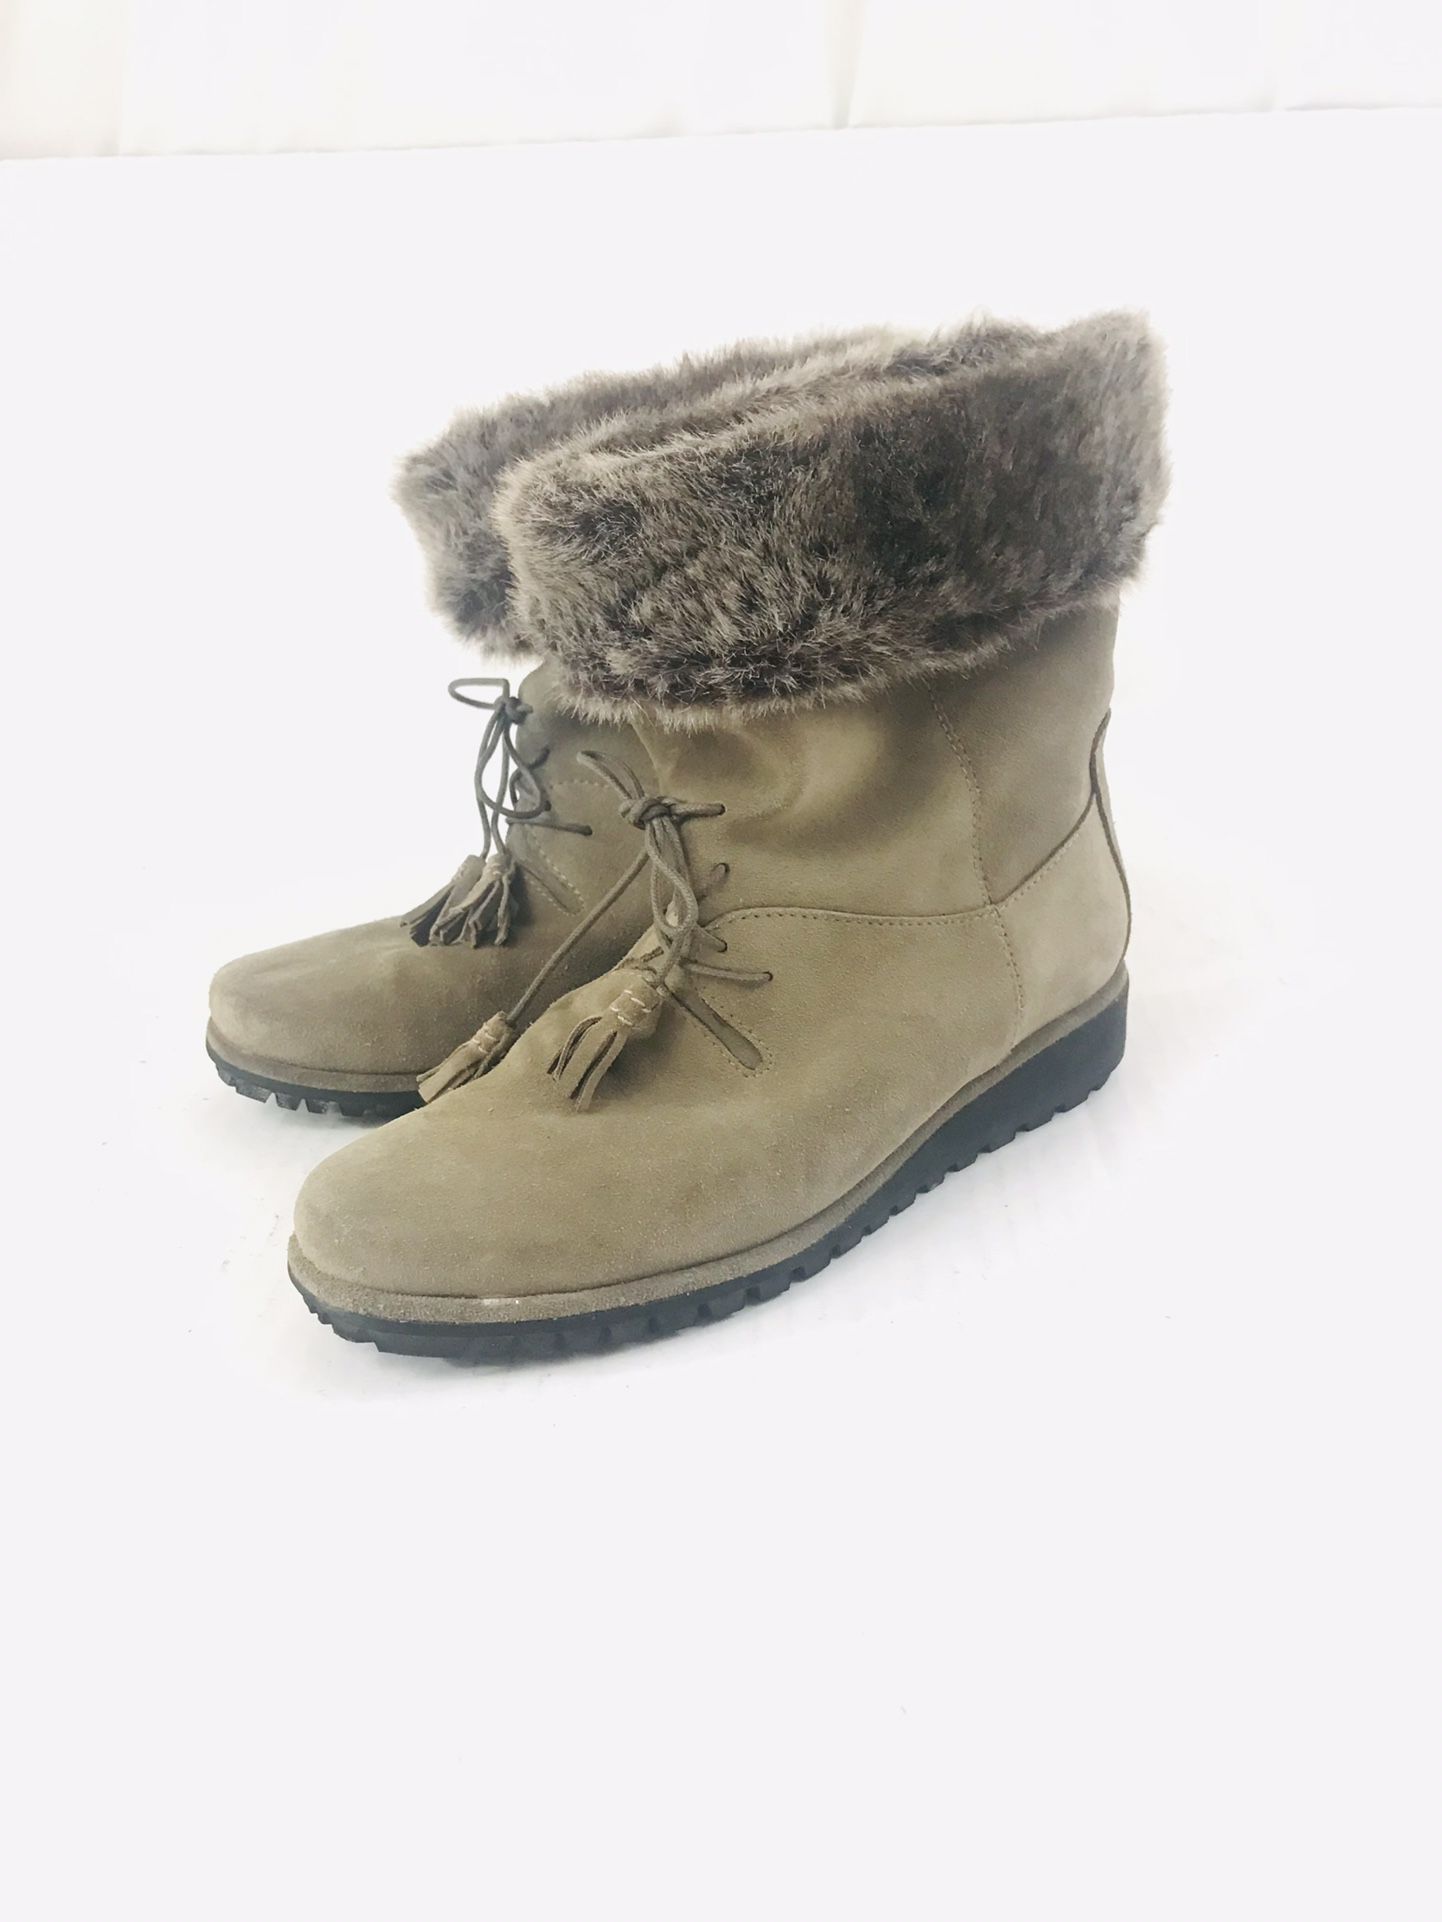 Stuart Weitzman Fur Lined Winter Boots - Size 6.5